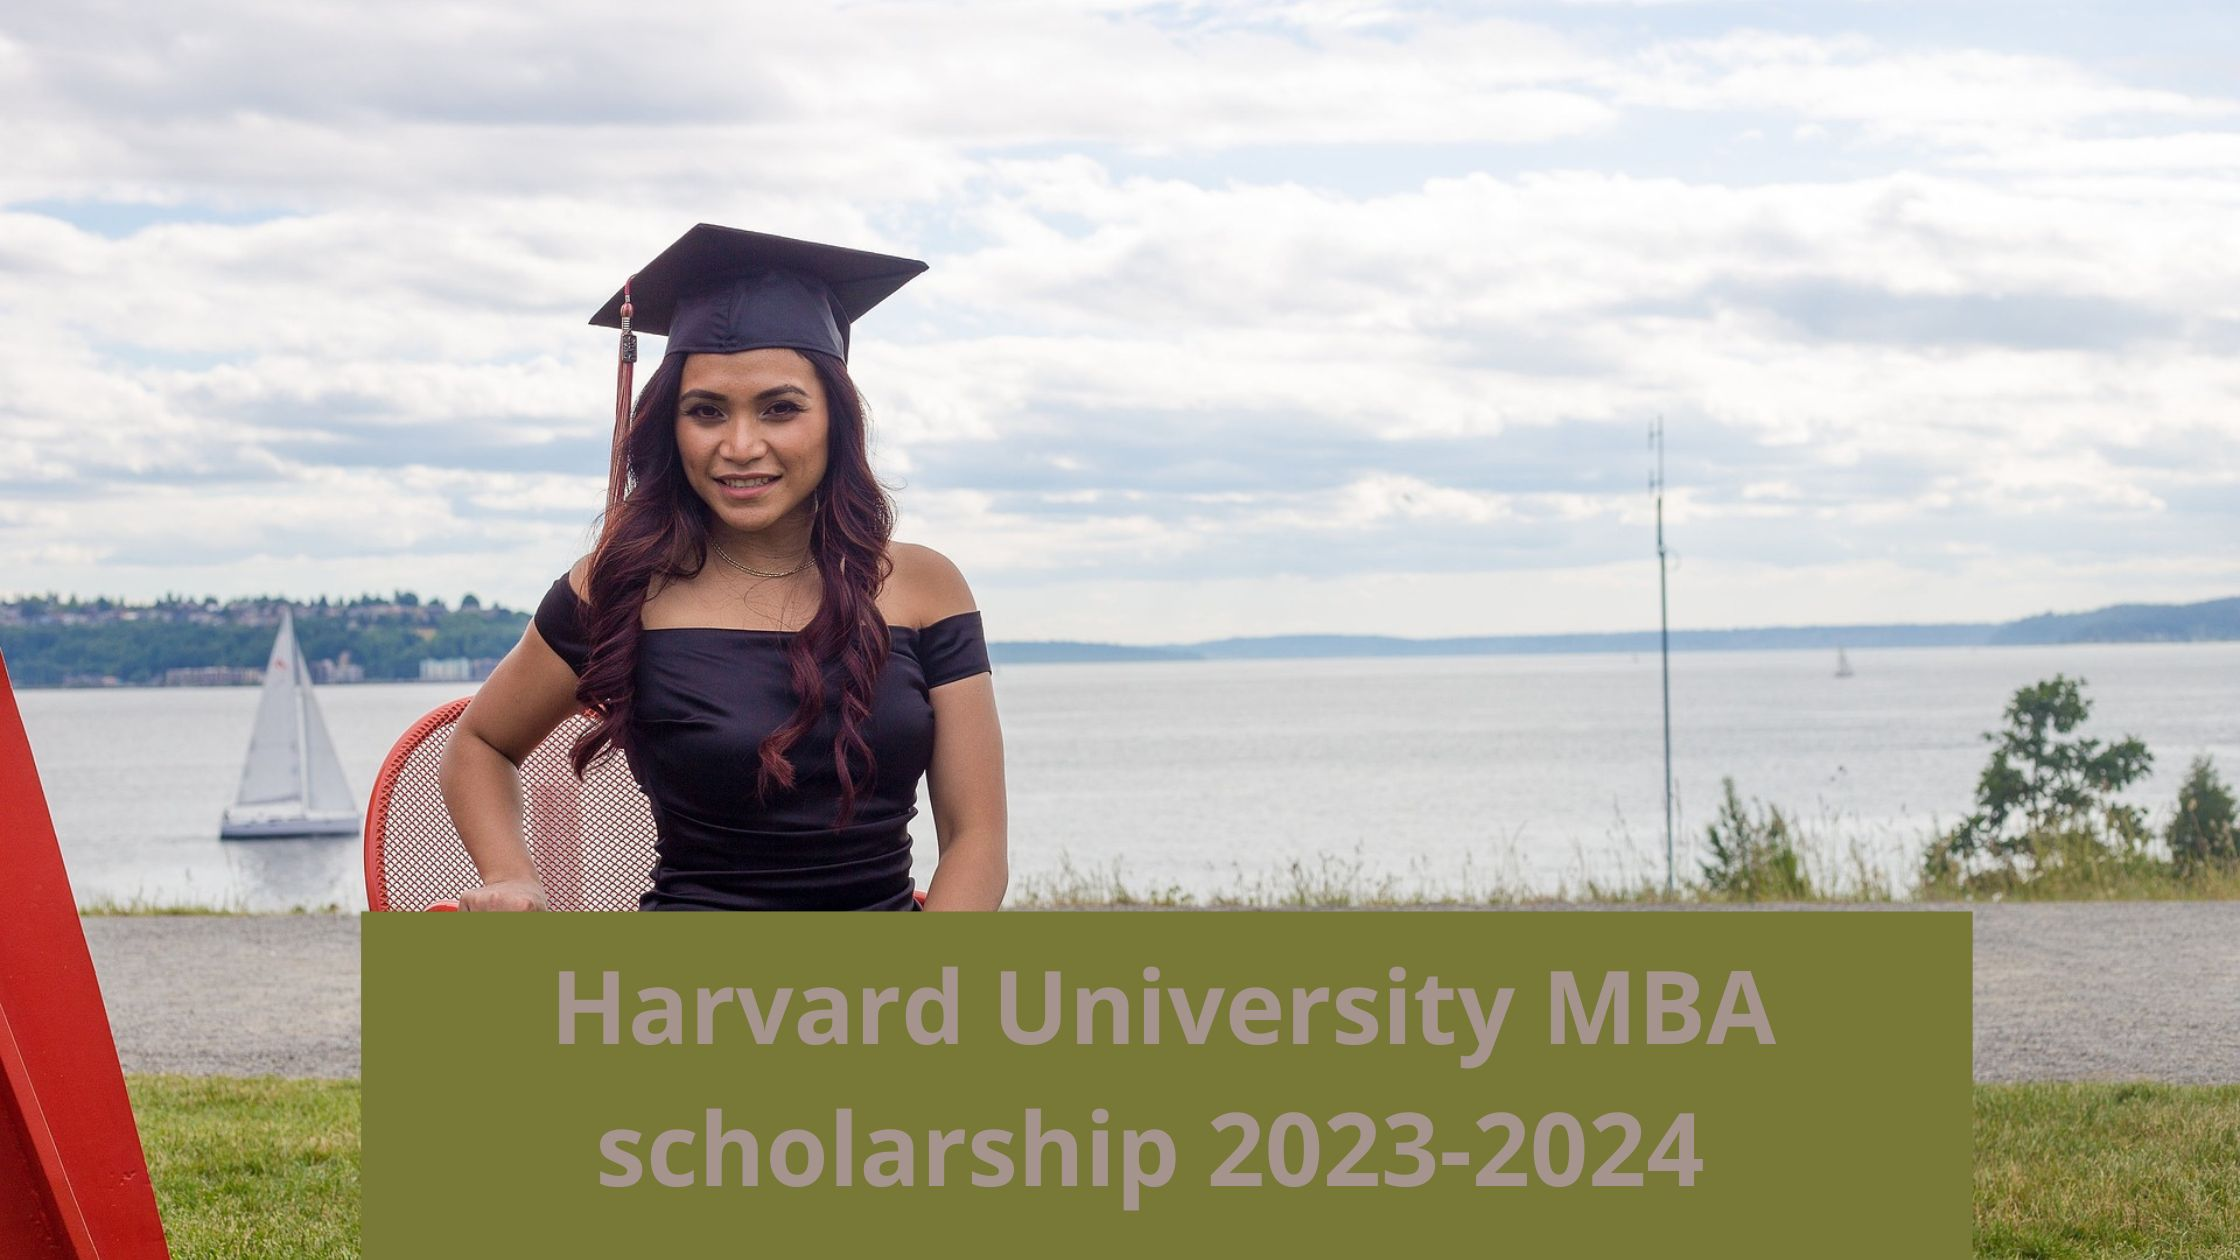 Harvard University MBA scholarship 2023-2024